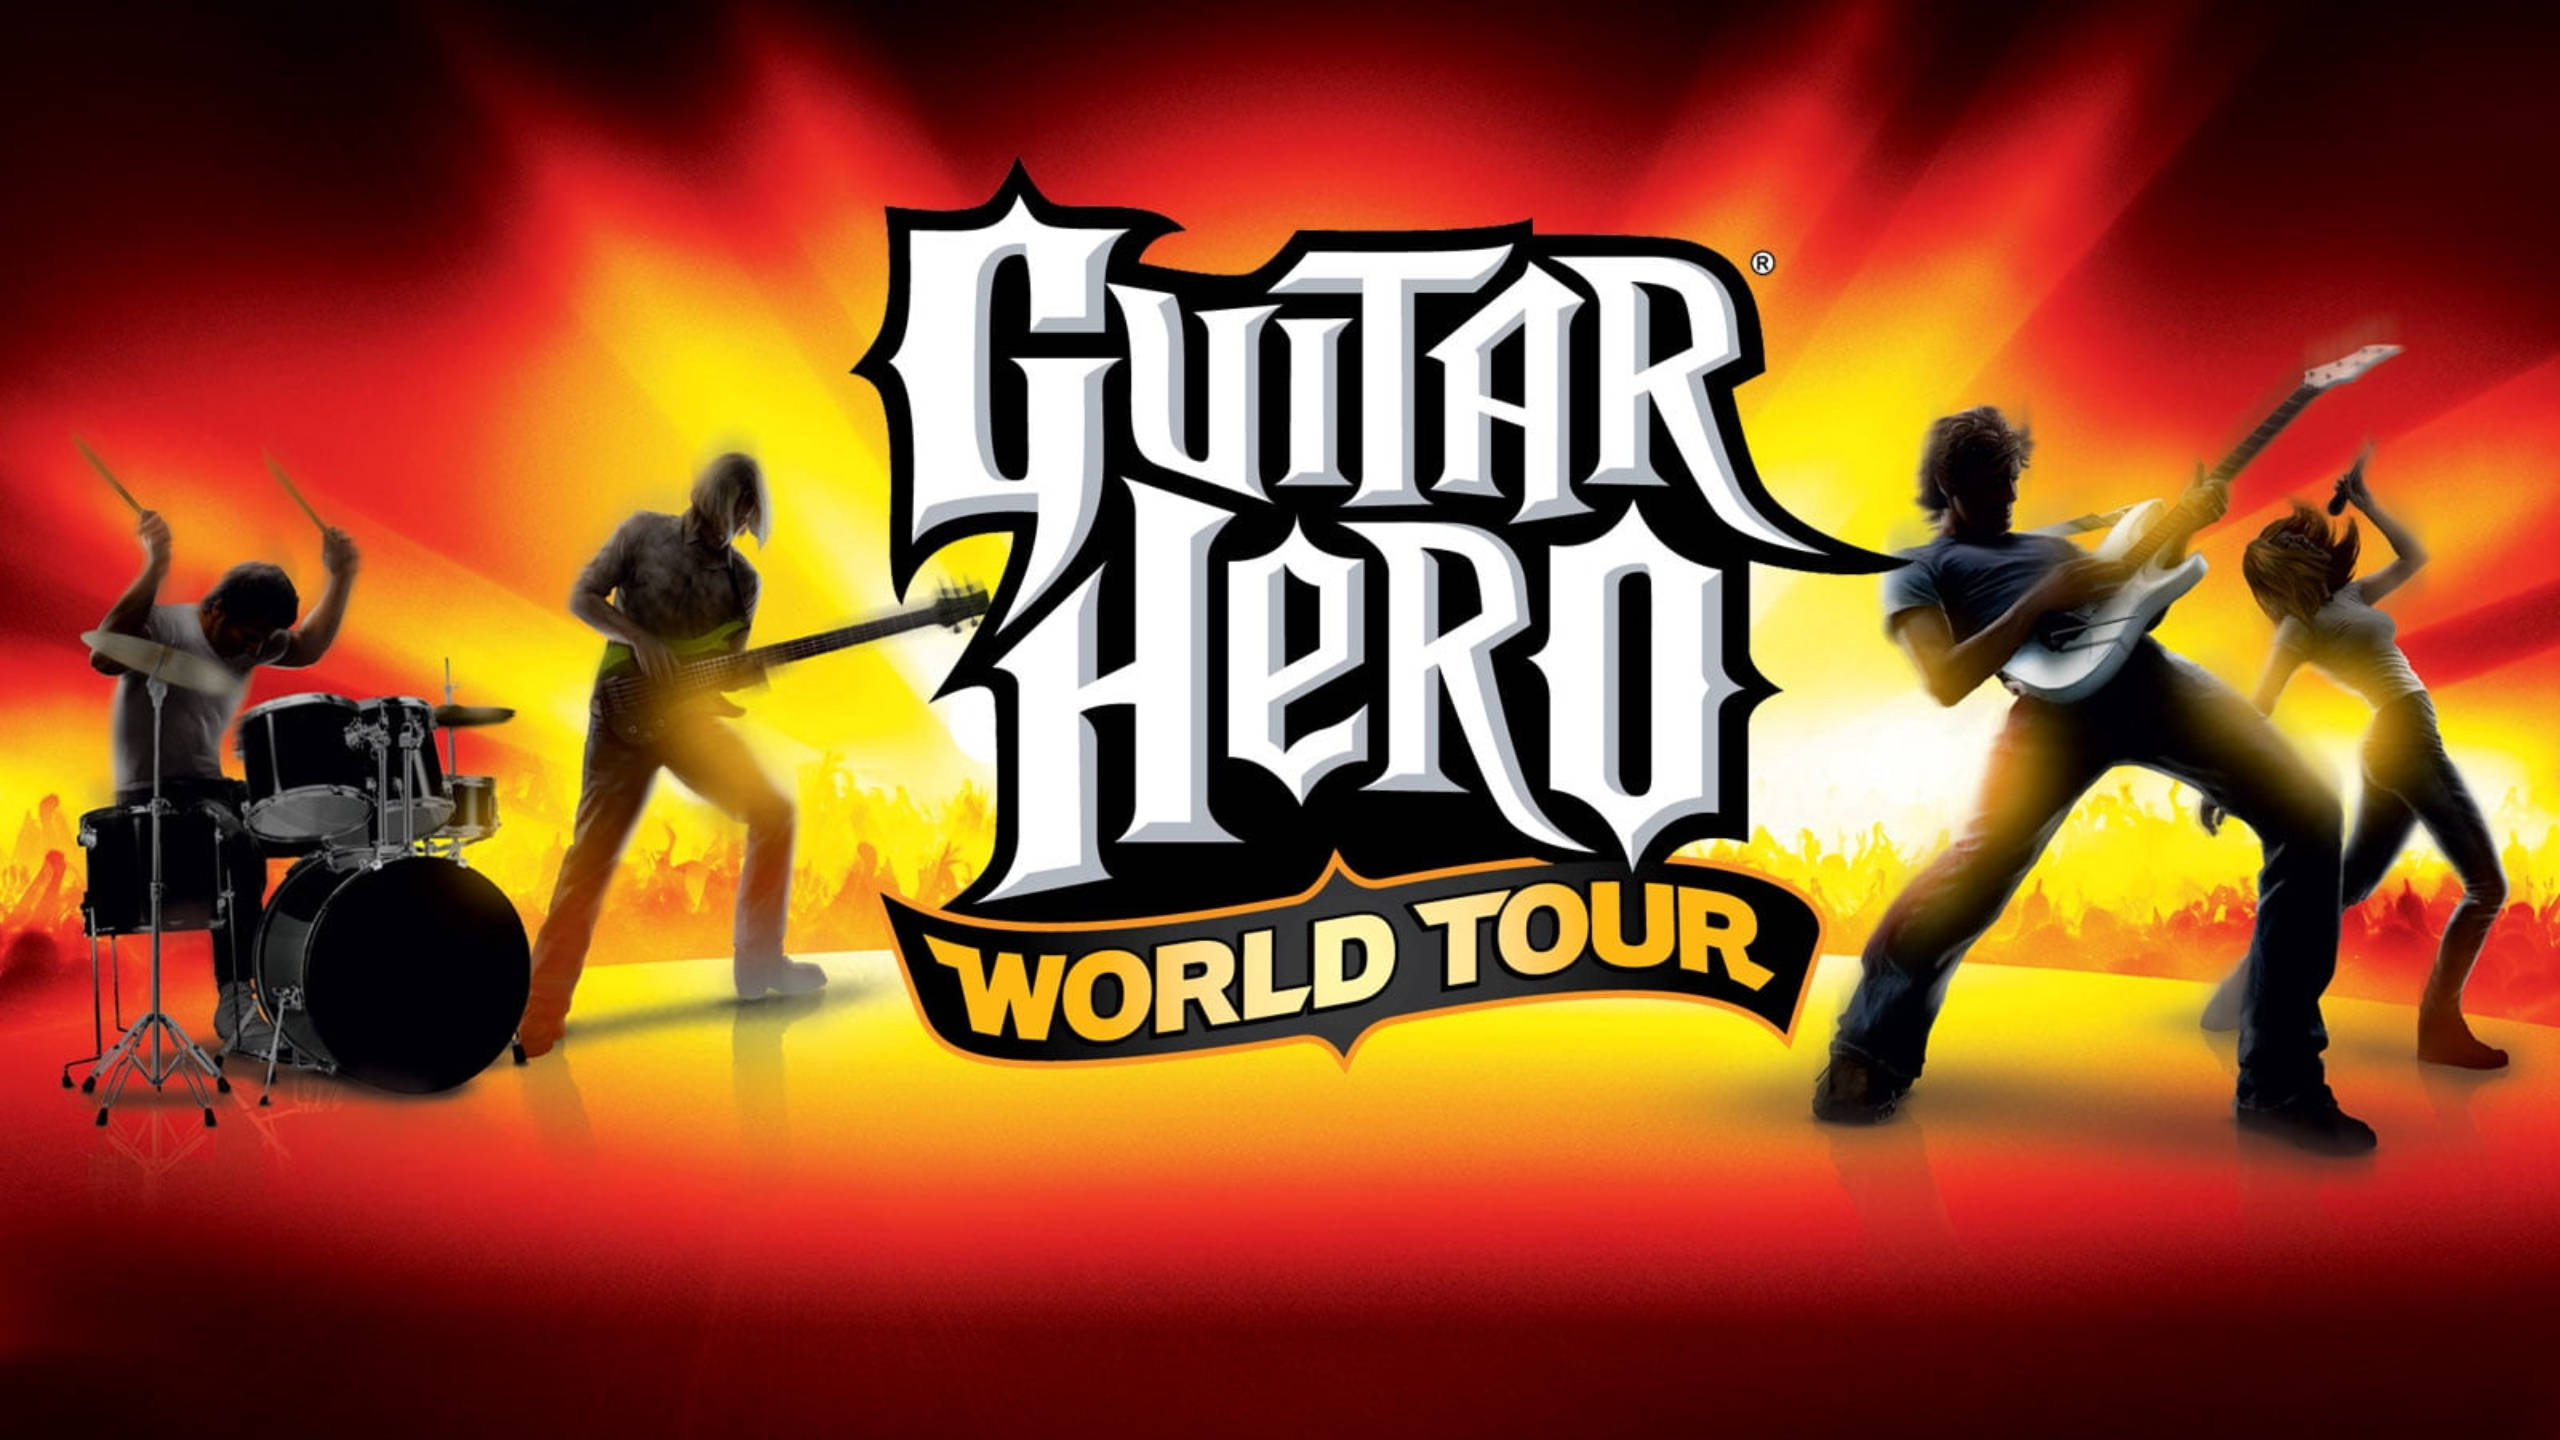 Download Guitar Hero World Tour Poster Wallpaper